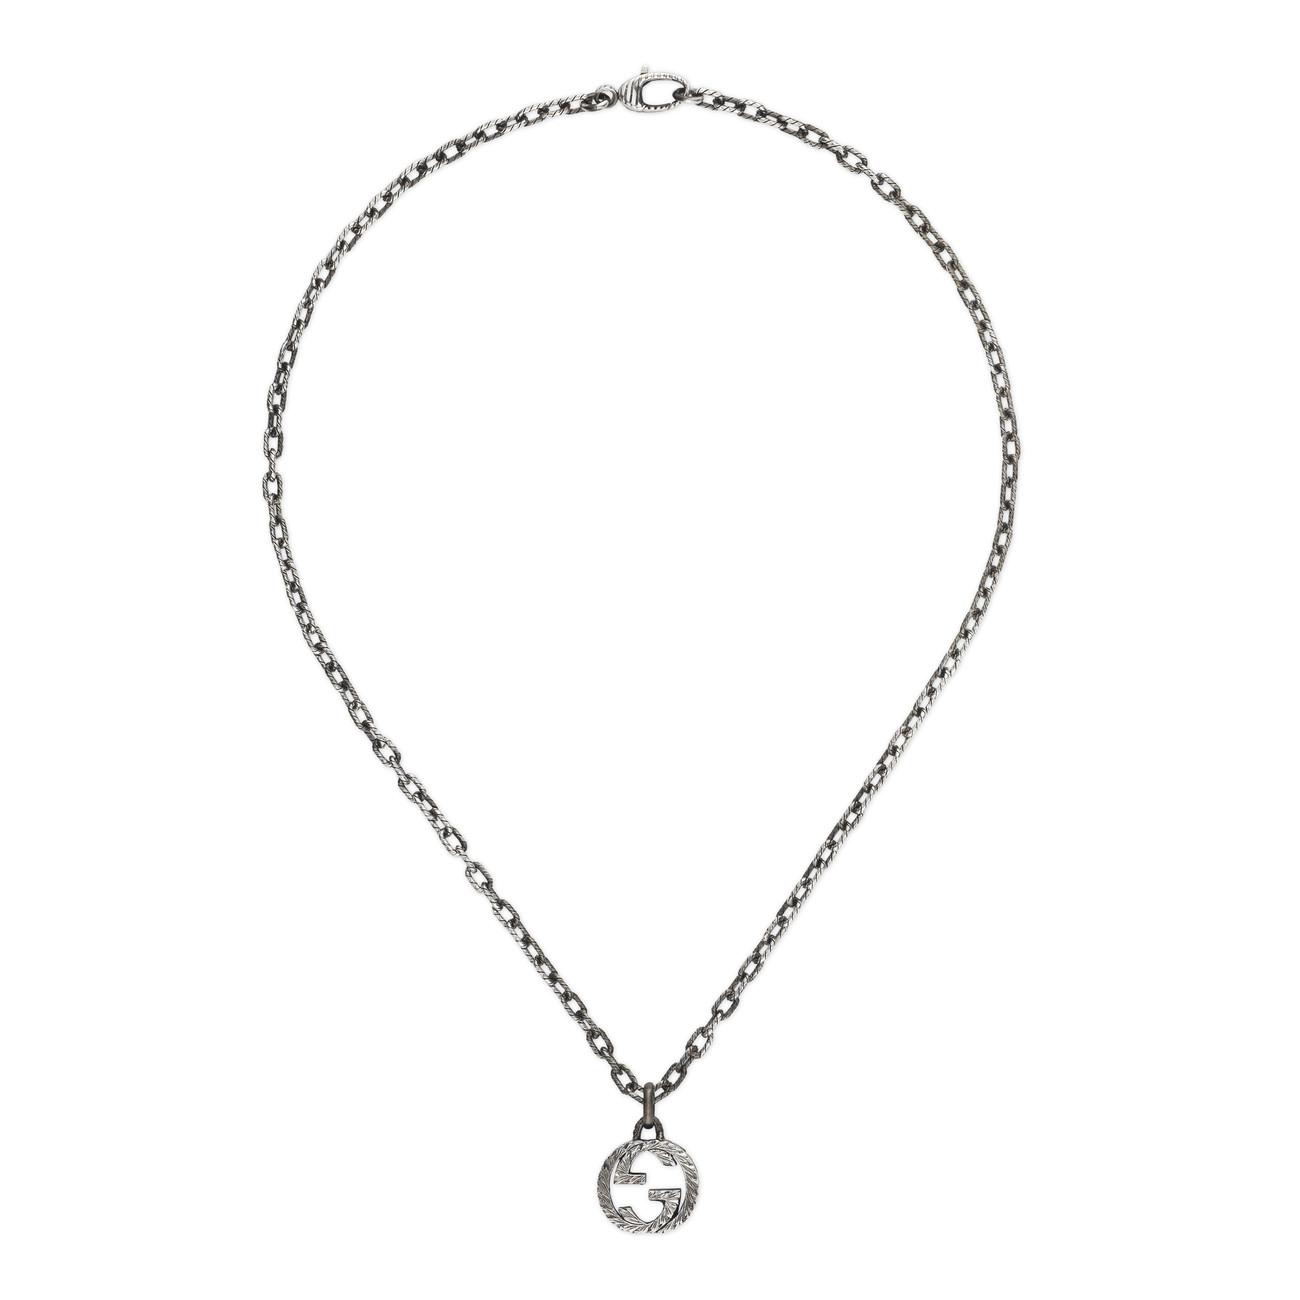 Lyst - Gucci Interlocking G Pendant Necklace in Metallic for Men - Save ...